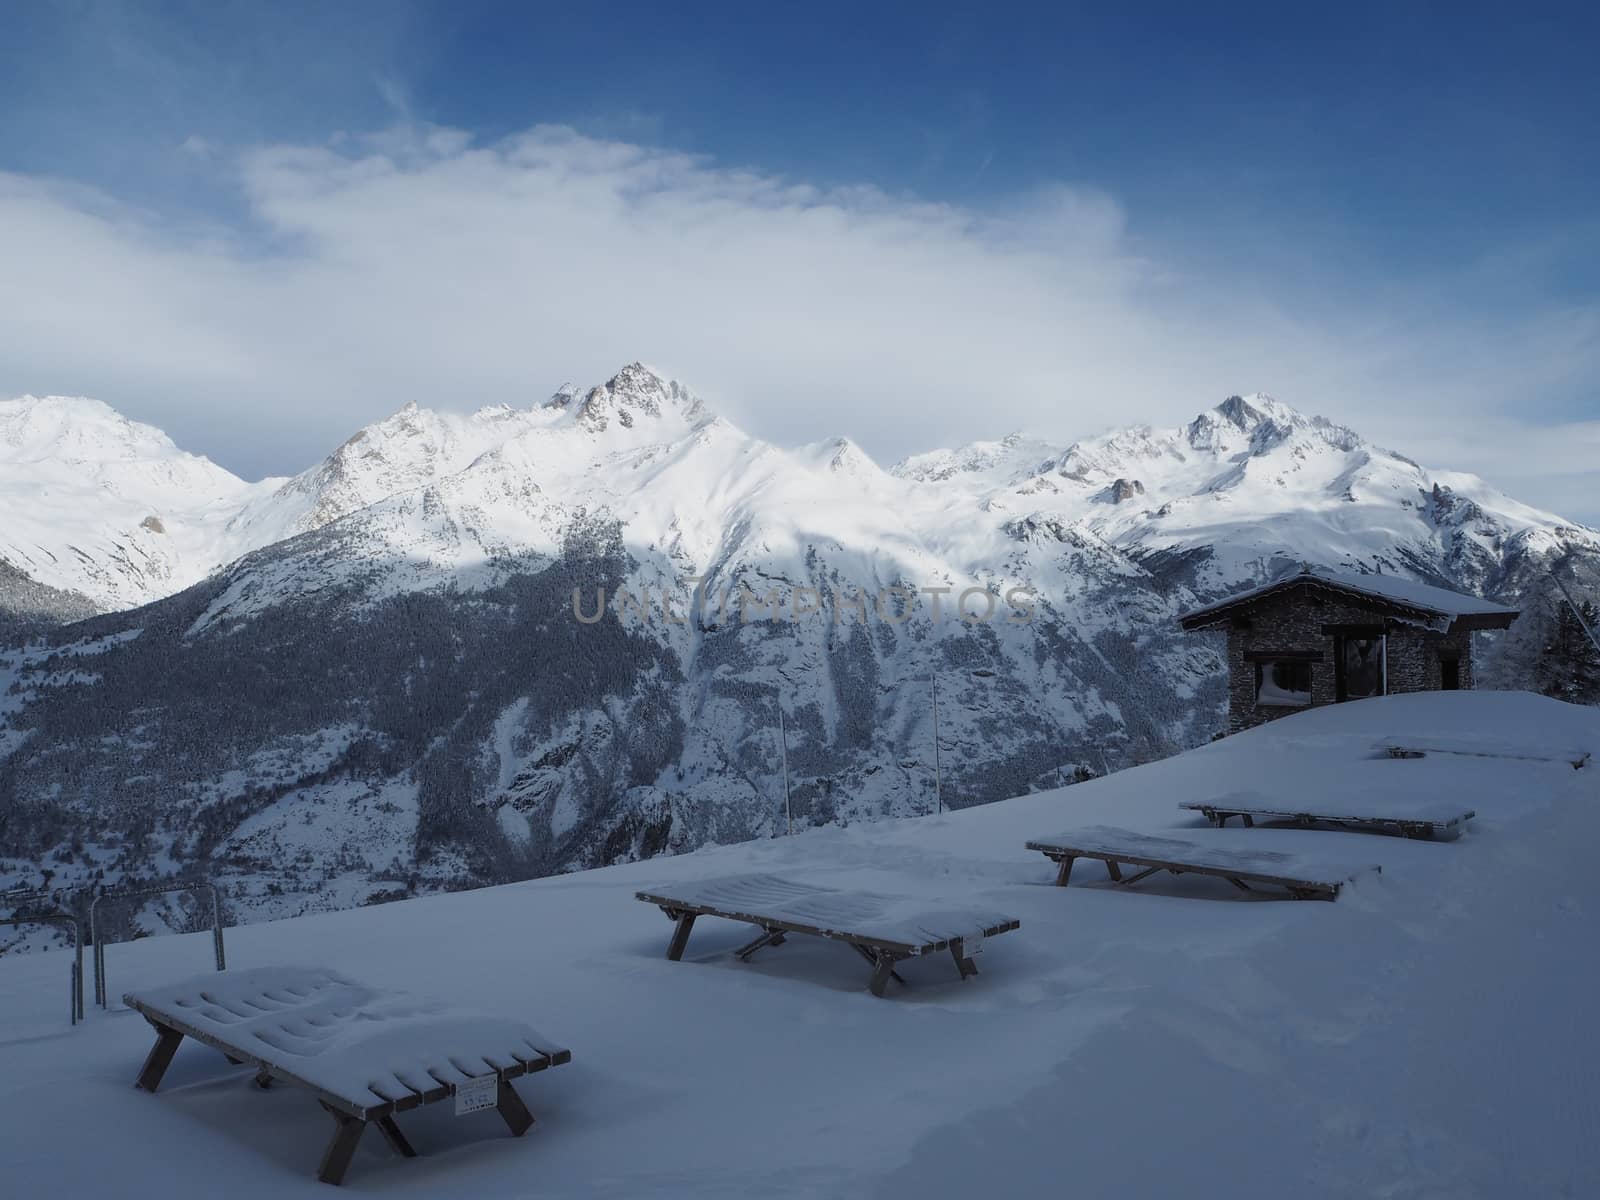 Alpine mountain view in europe winter snow by Henkeova